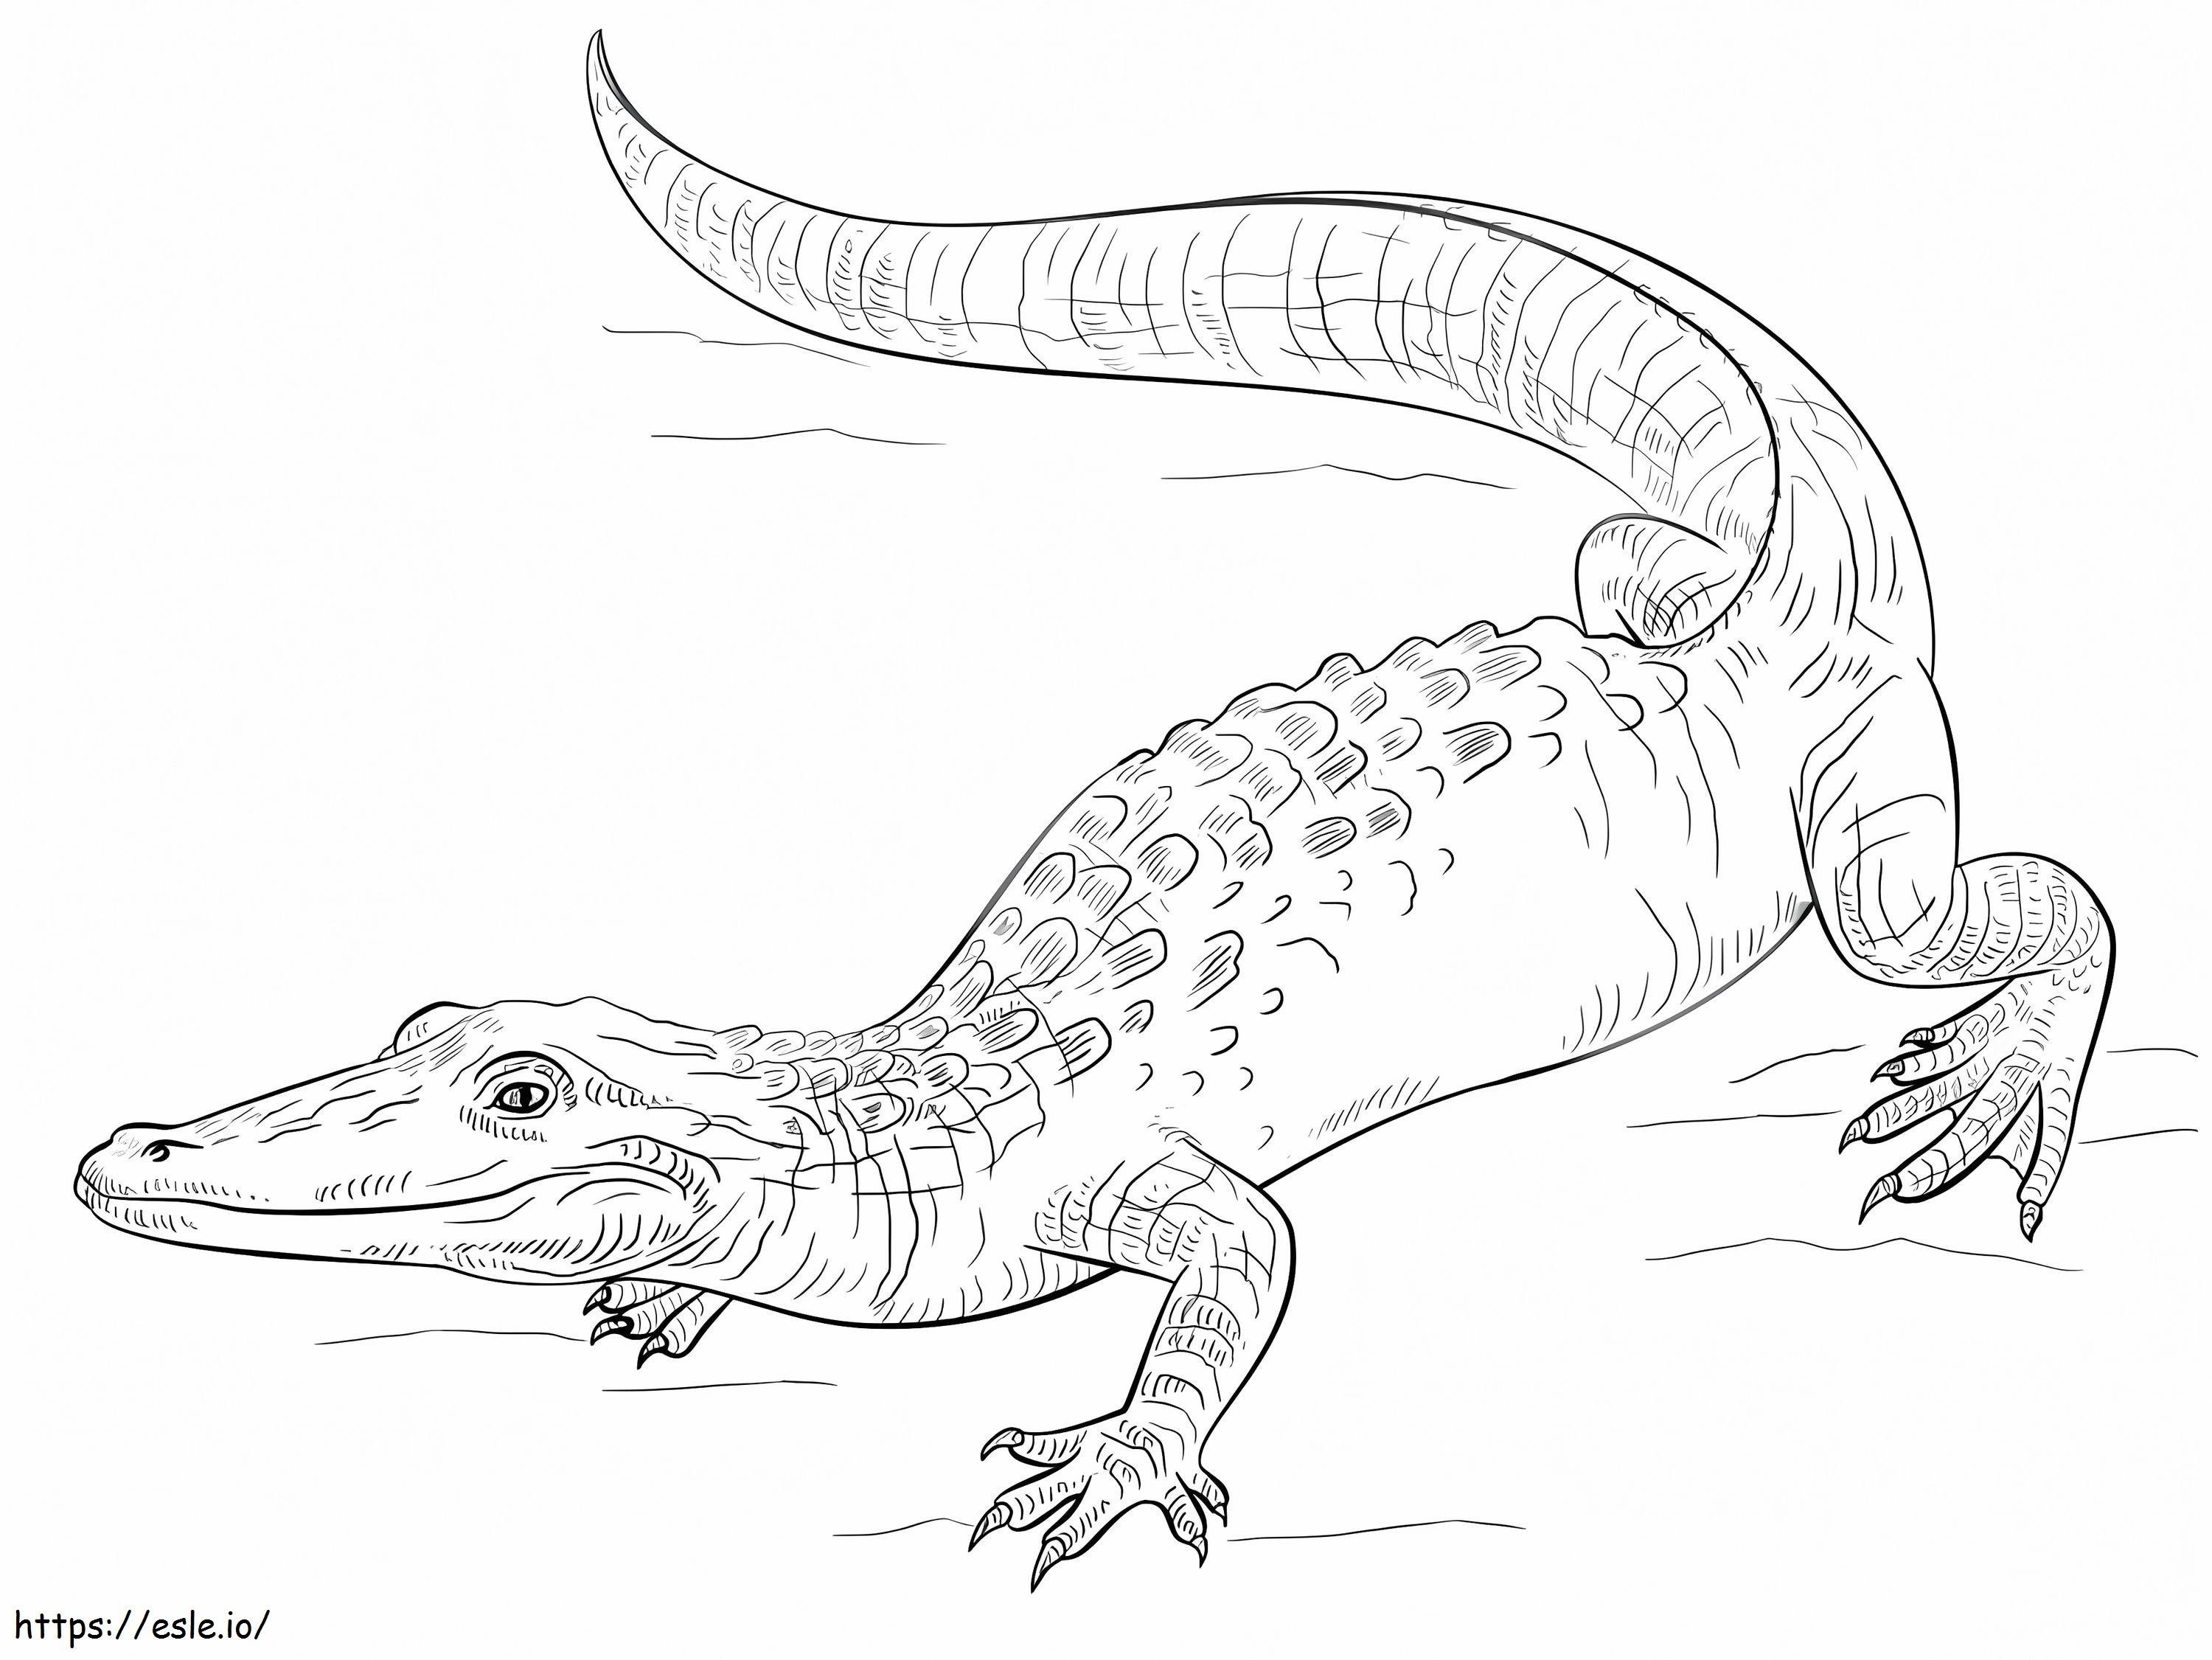 Printable Alligator coloring page